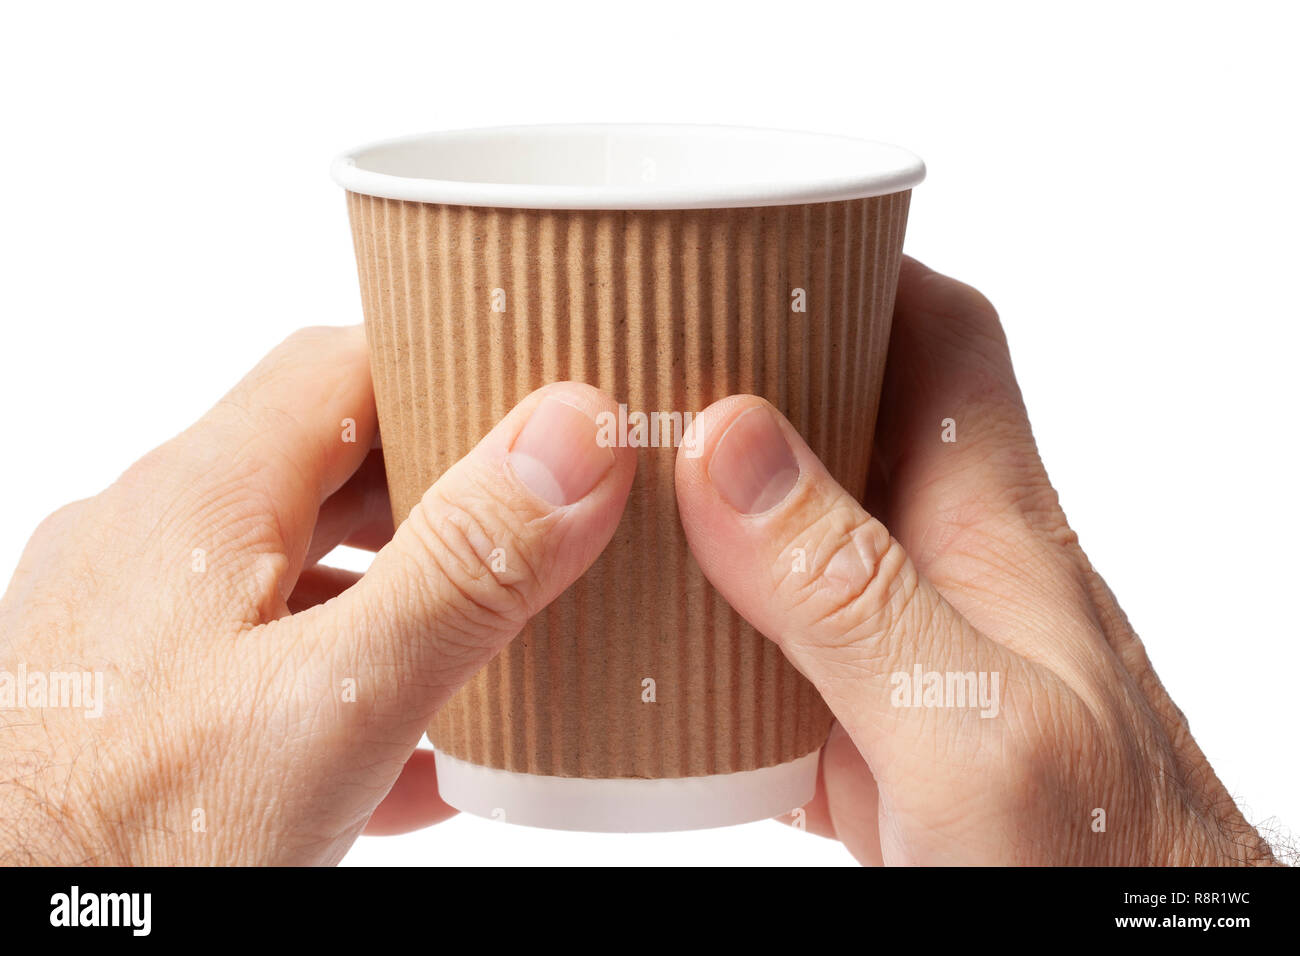 Scatola in cartone tazza di caffè in due mani umane su bianco. Foto Stock